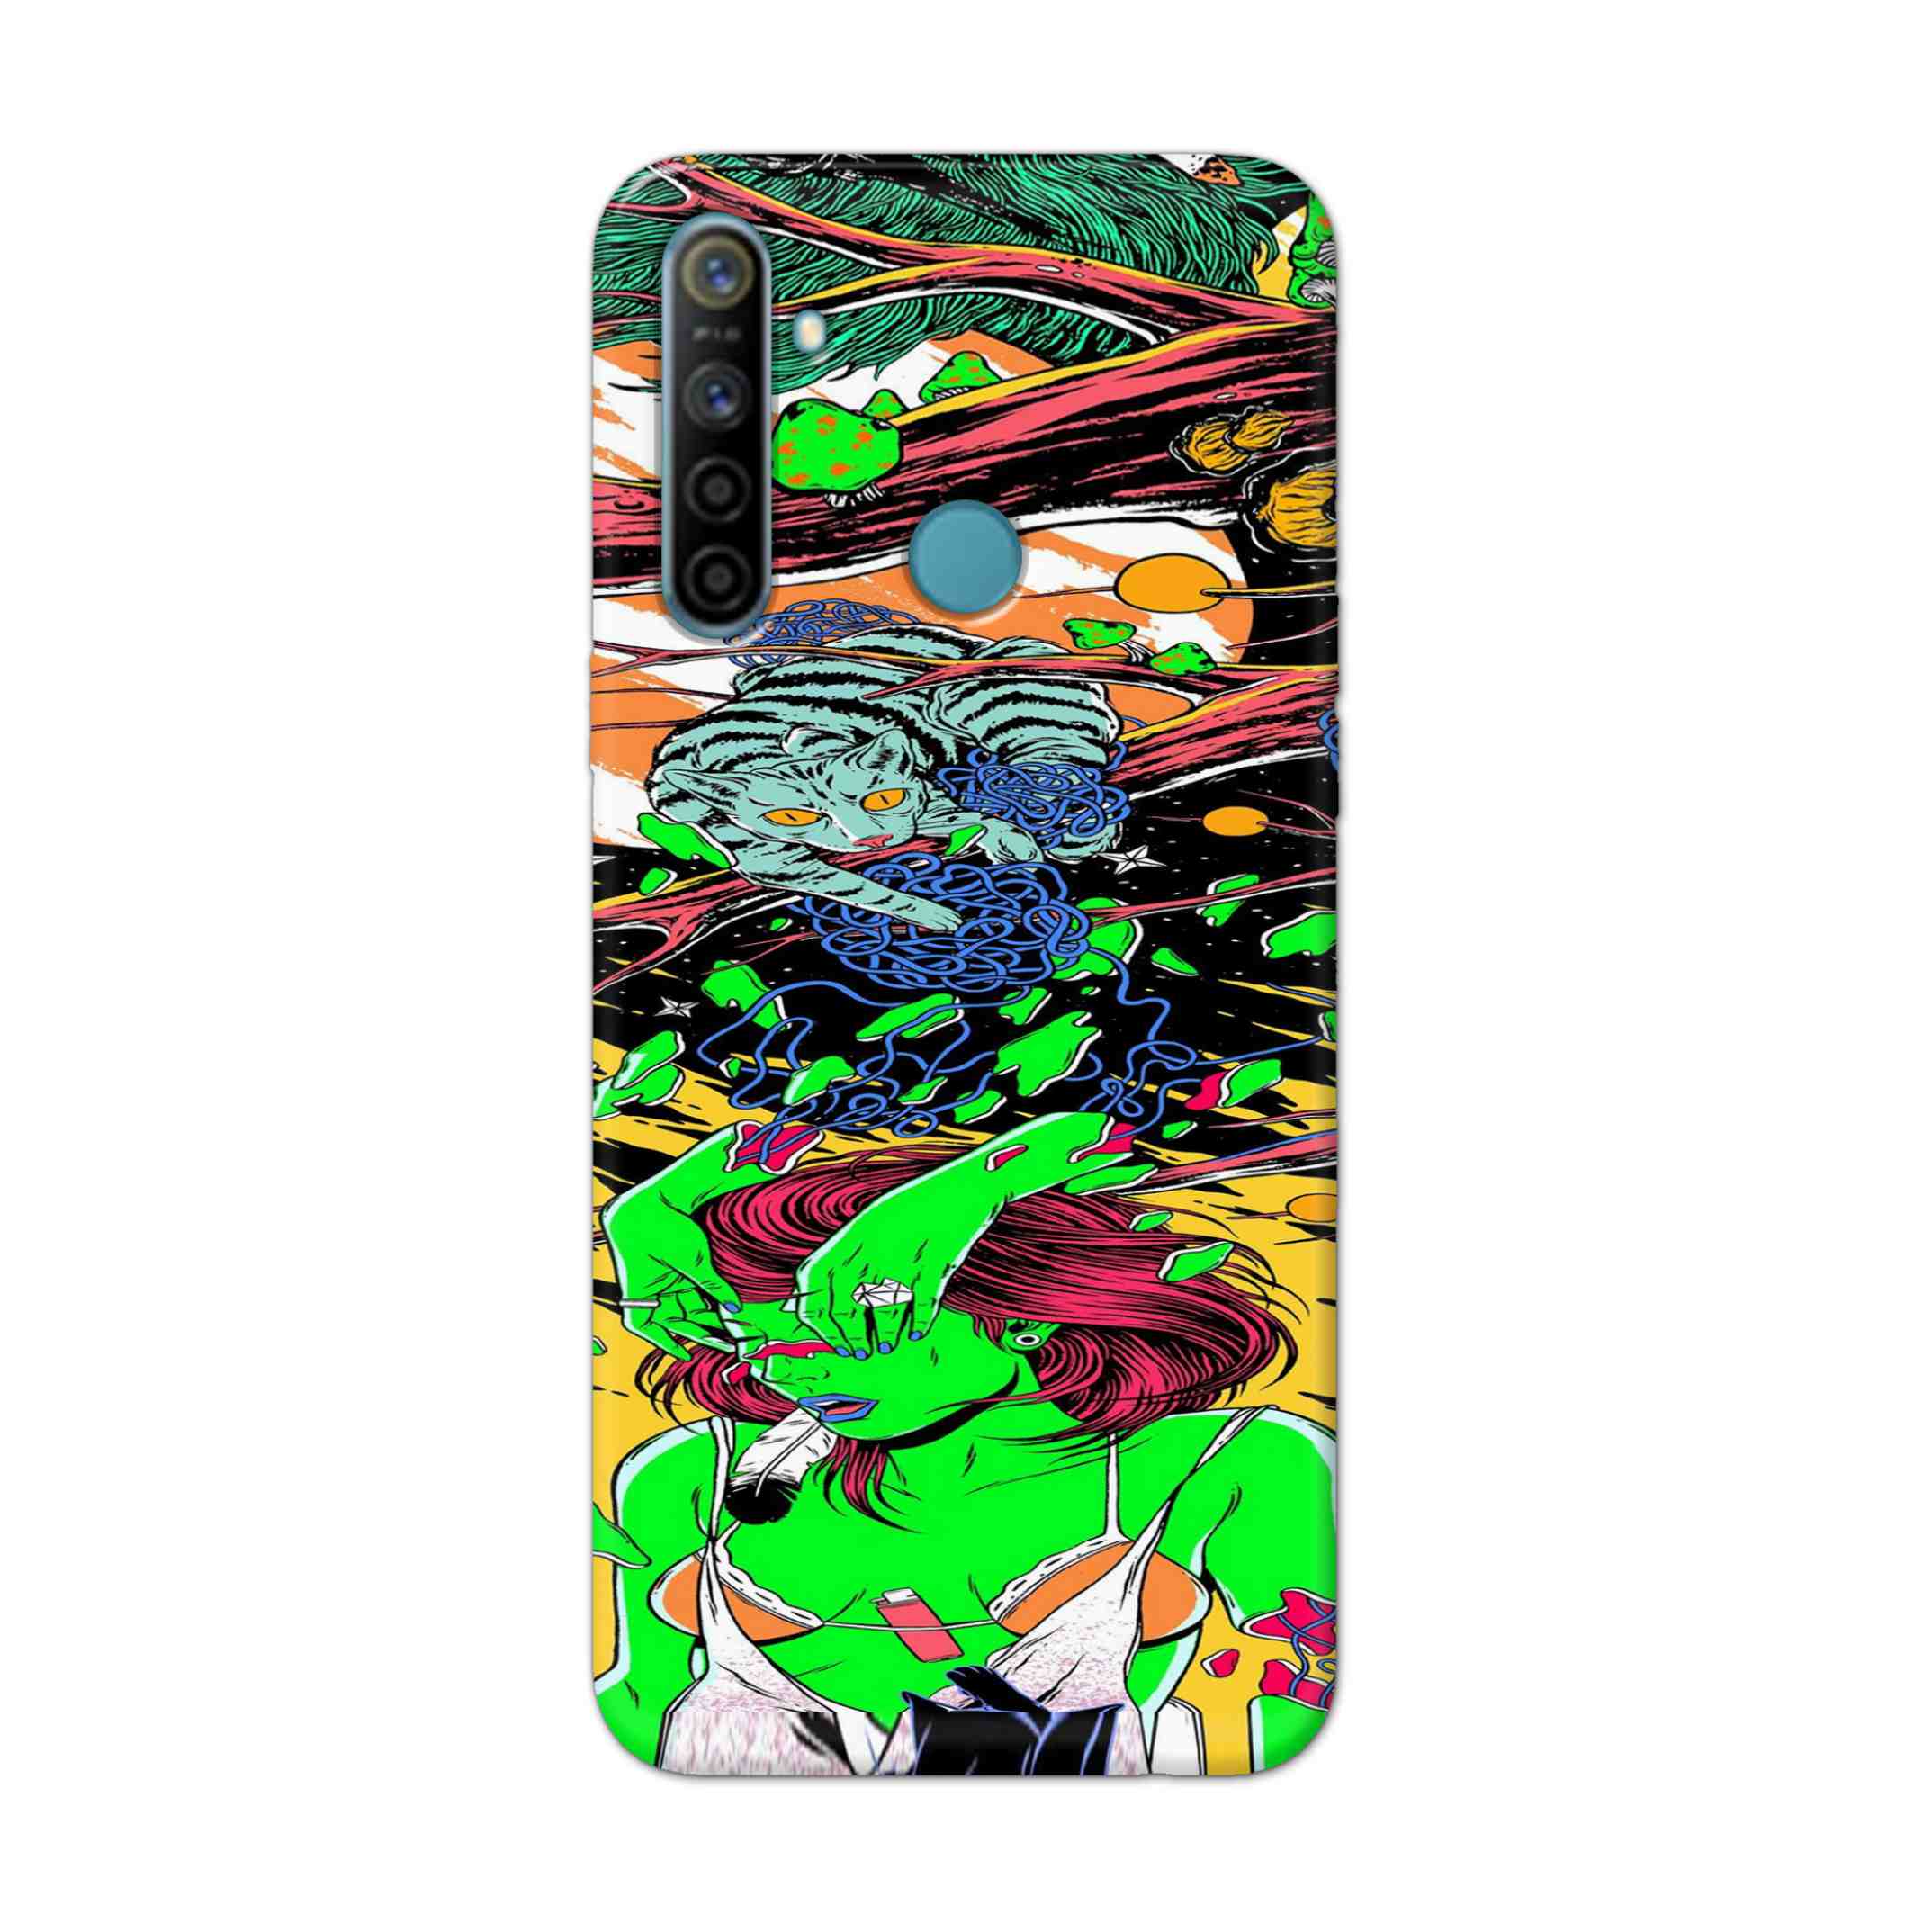 Buy Green Girl Art Hard Back Mobile Phone Case Cover For Realme 5i Online